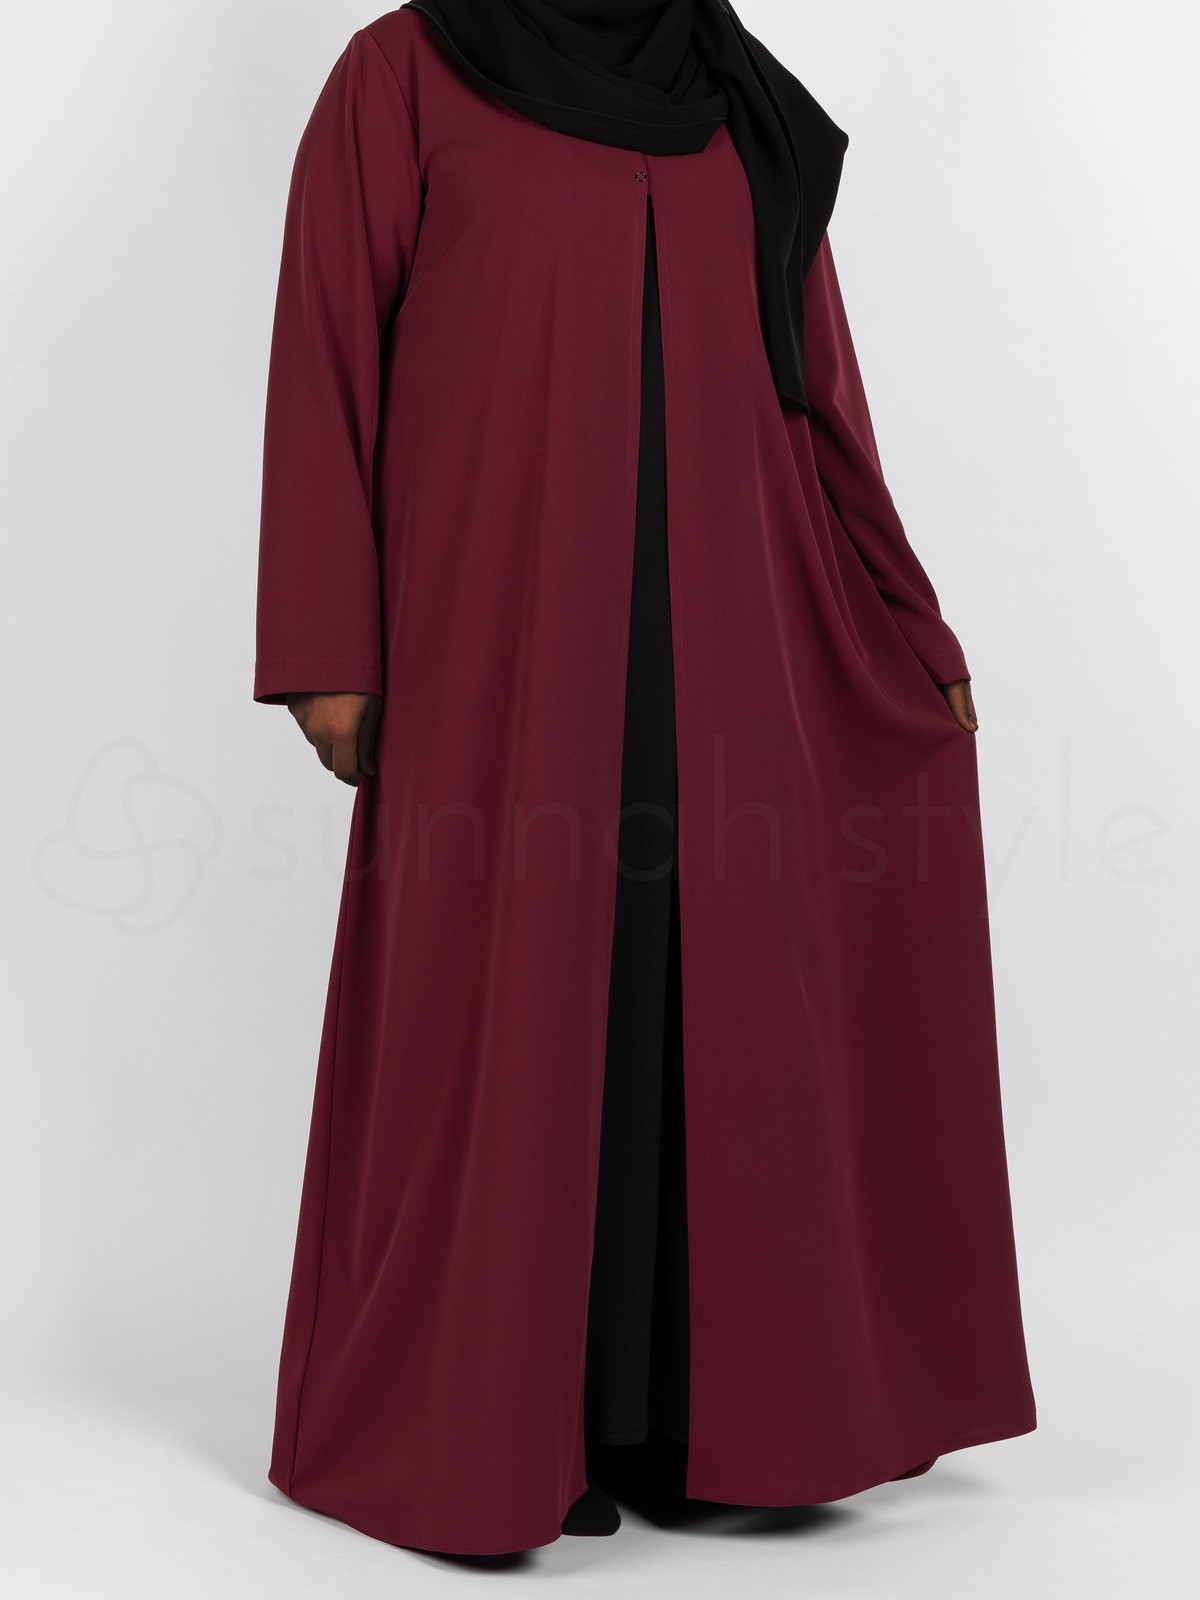 Sunnah Style - Classic Robe (Burgundy)